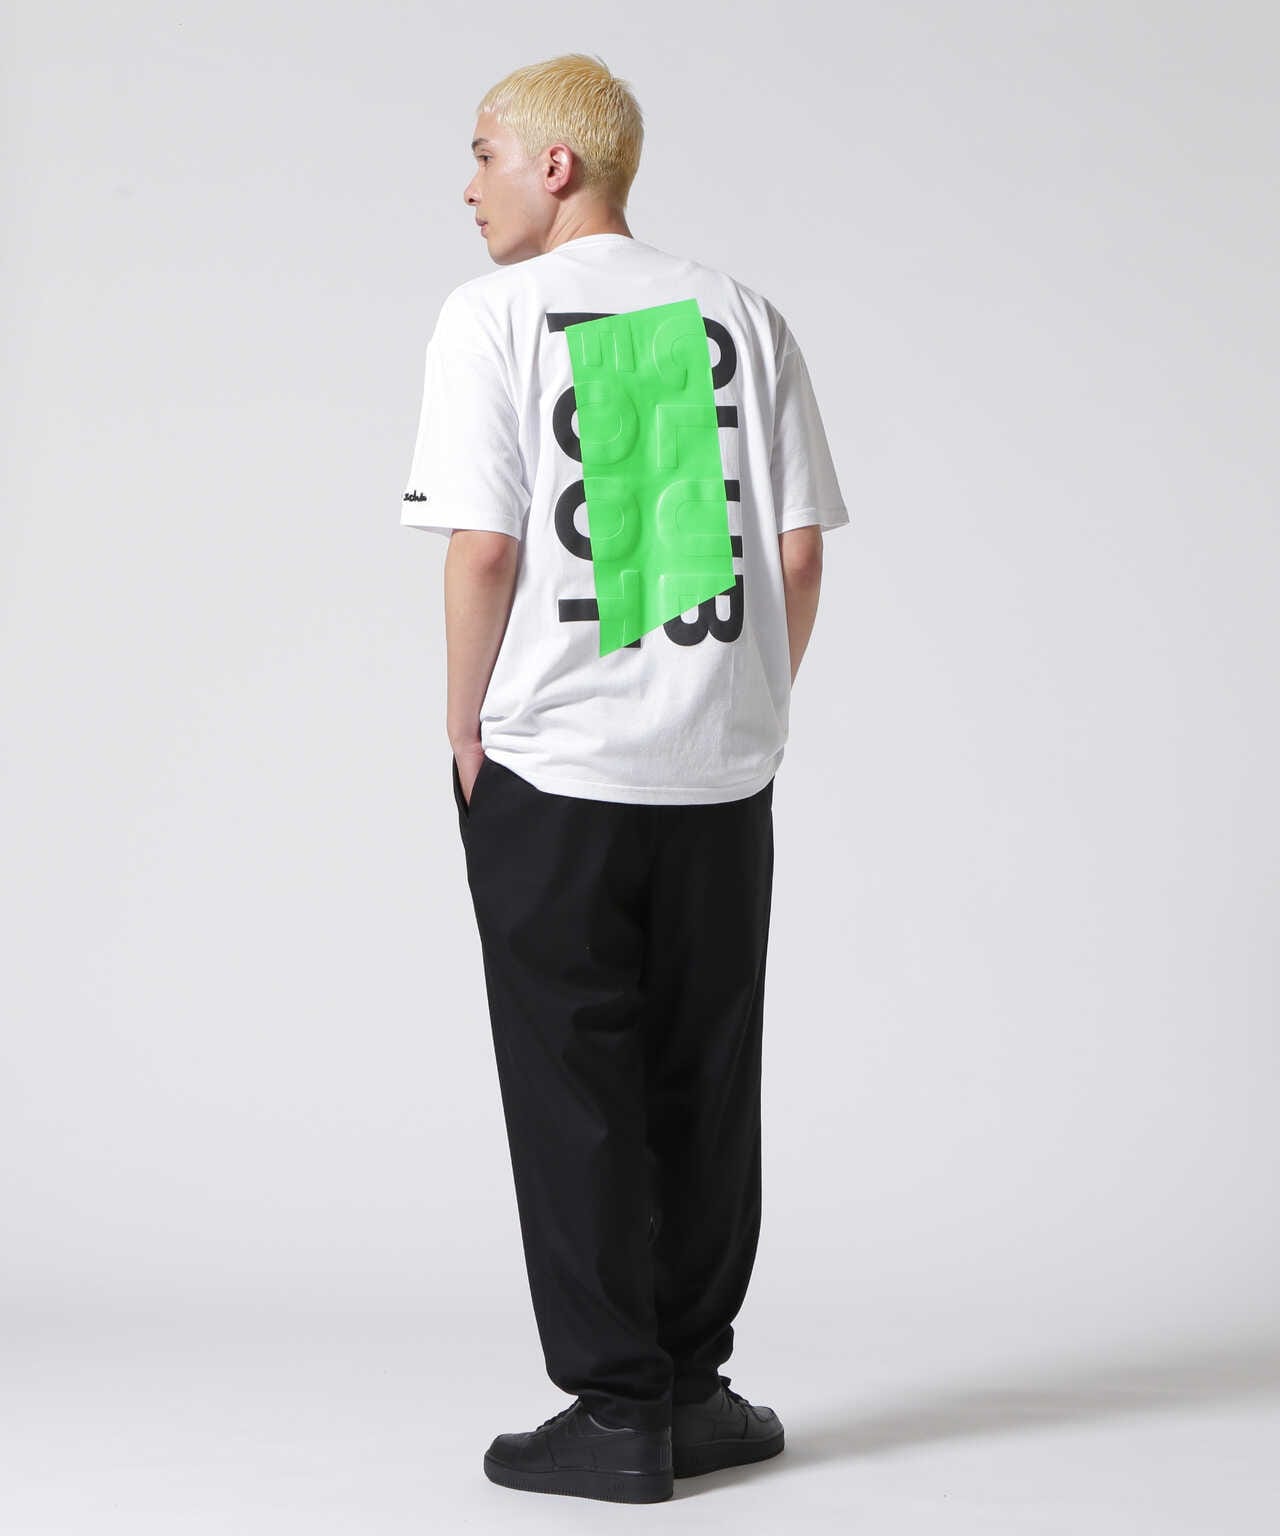 DankeSchon/ダンケシェーン/10th Anniversary CLUBFOOT SST/10周年 ロゴTシャツ